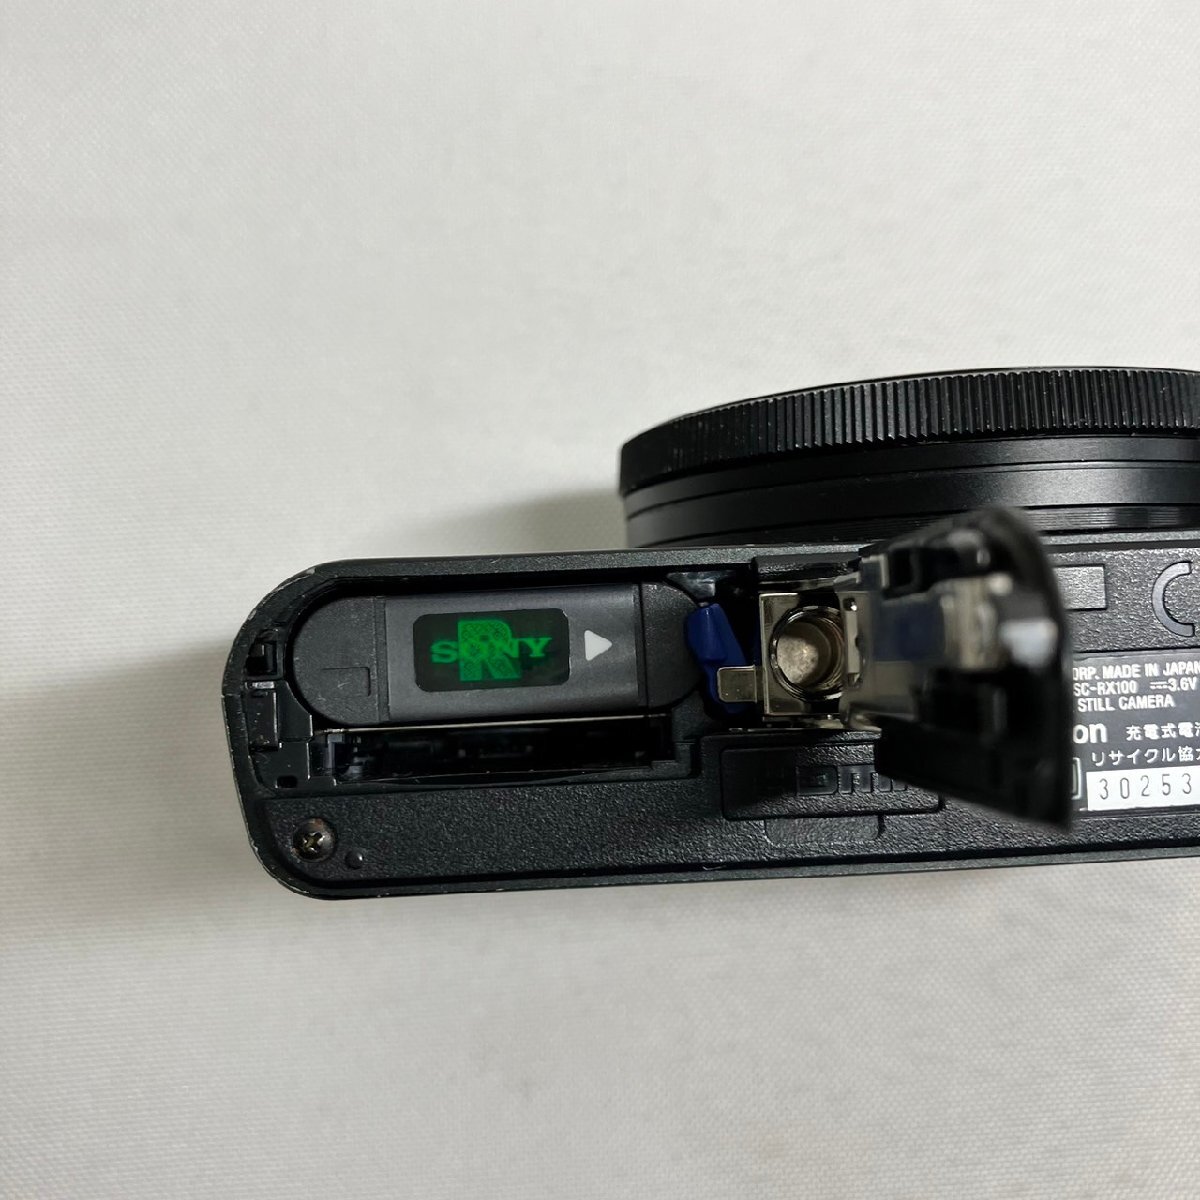 [ текущее состояние товар ][5-295]SONY Cyber-shot темно синий tejiDSC-RX100 цифровая камера утиль 